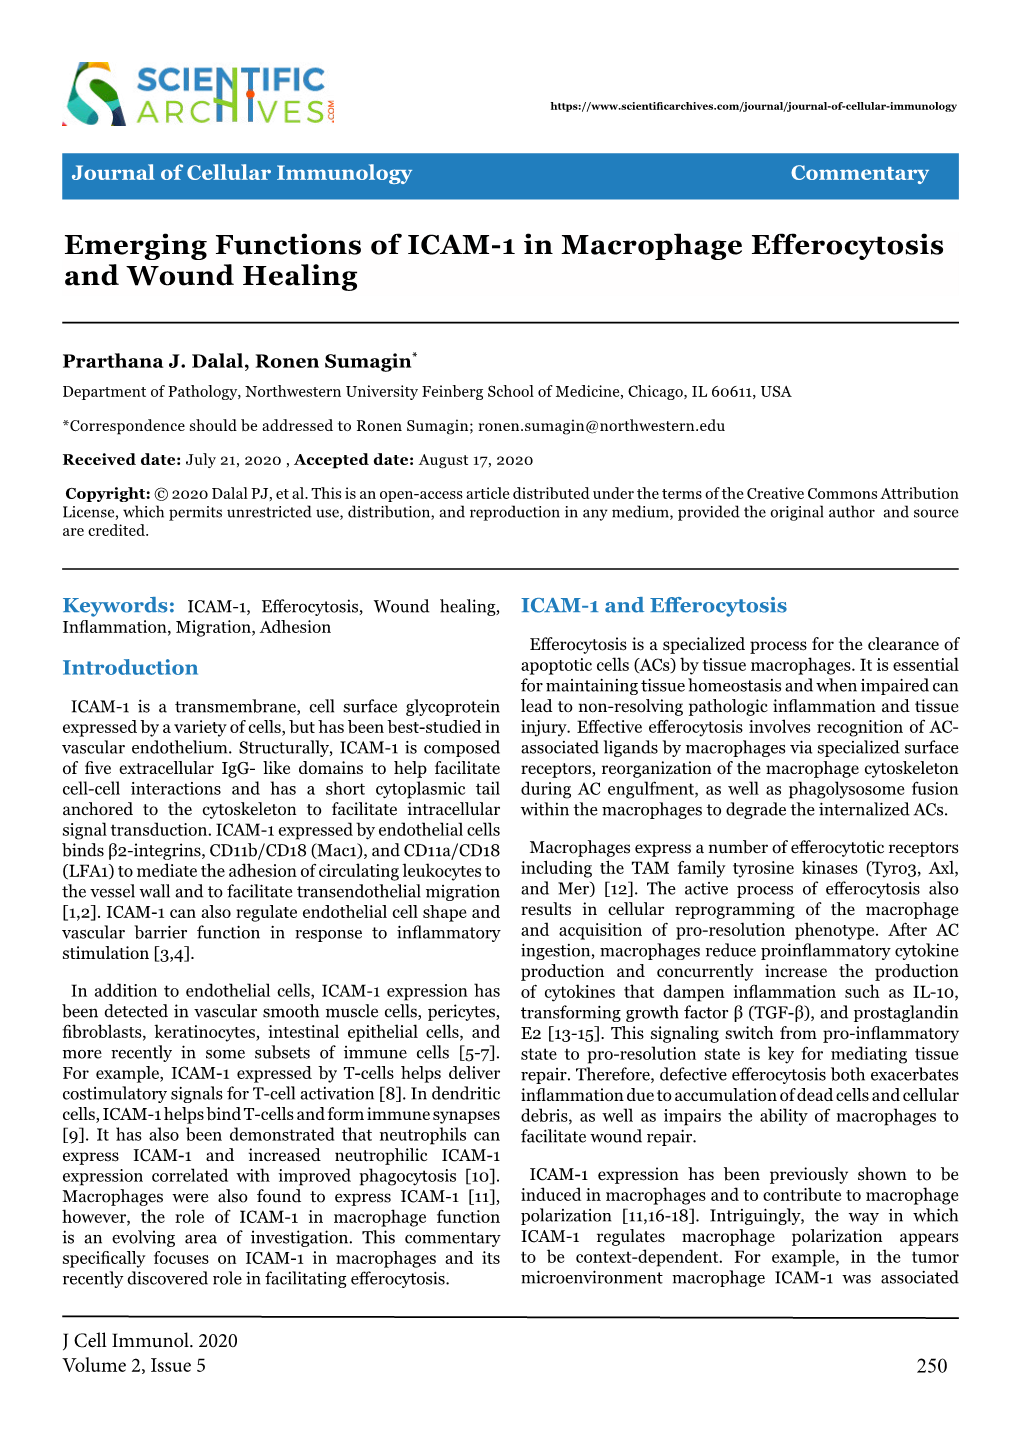 Emerging Functions of ICAM-1 in Macrophage Efferocytosis and Wound Healing